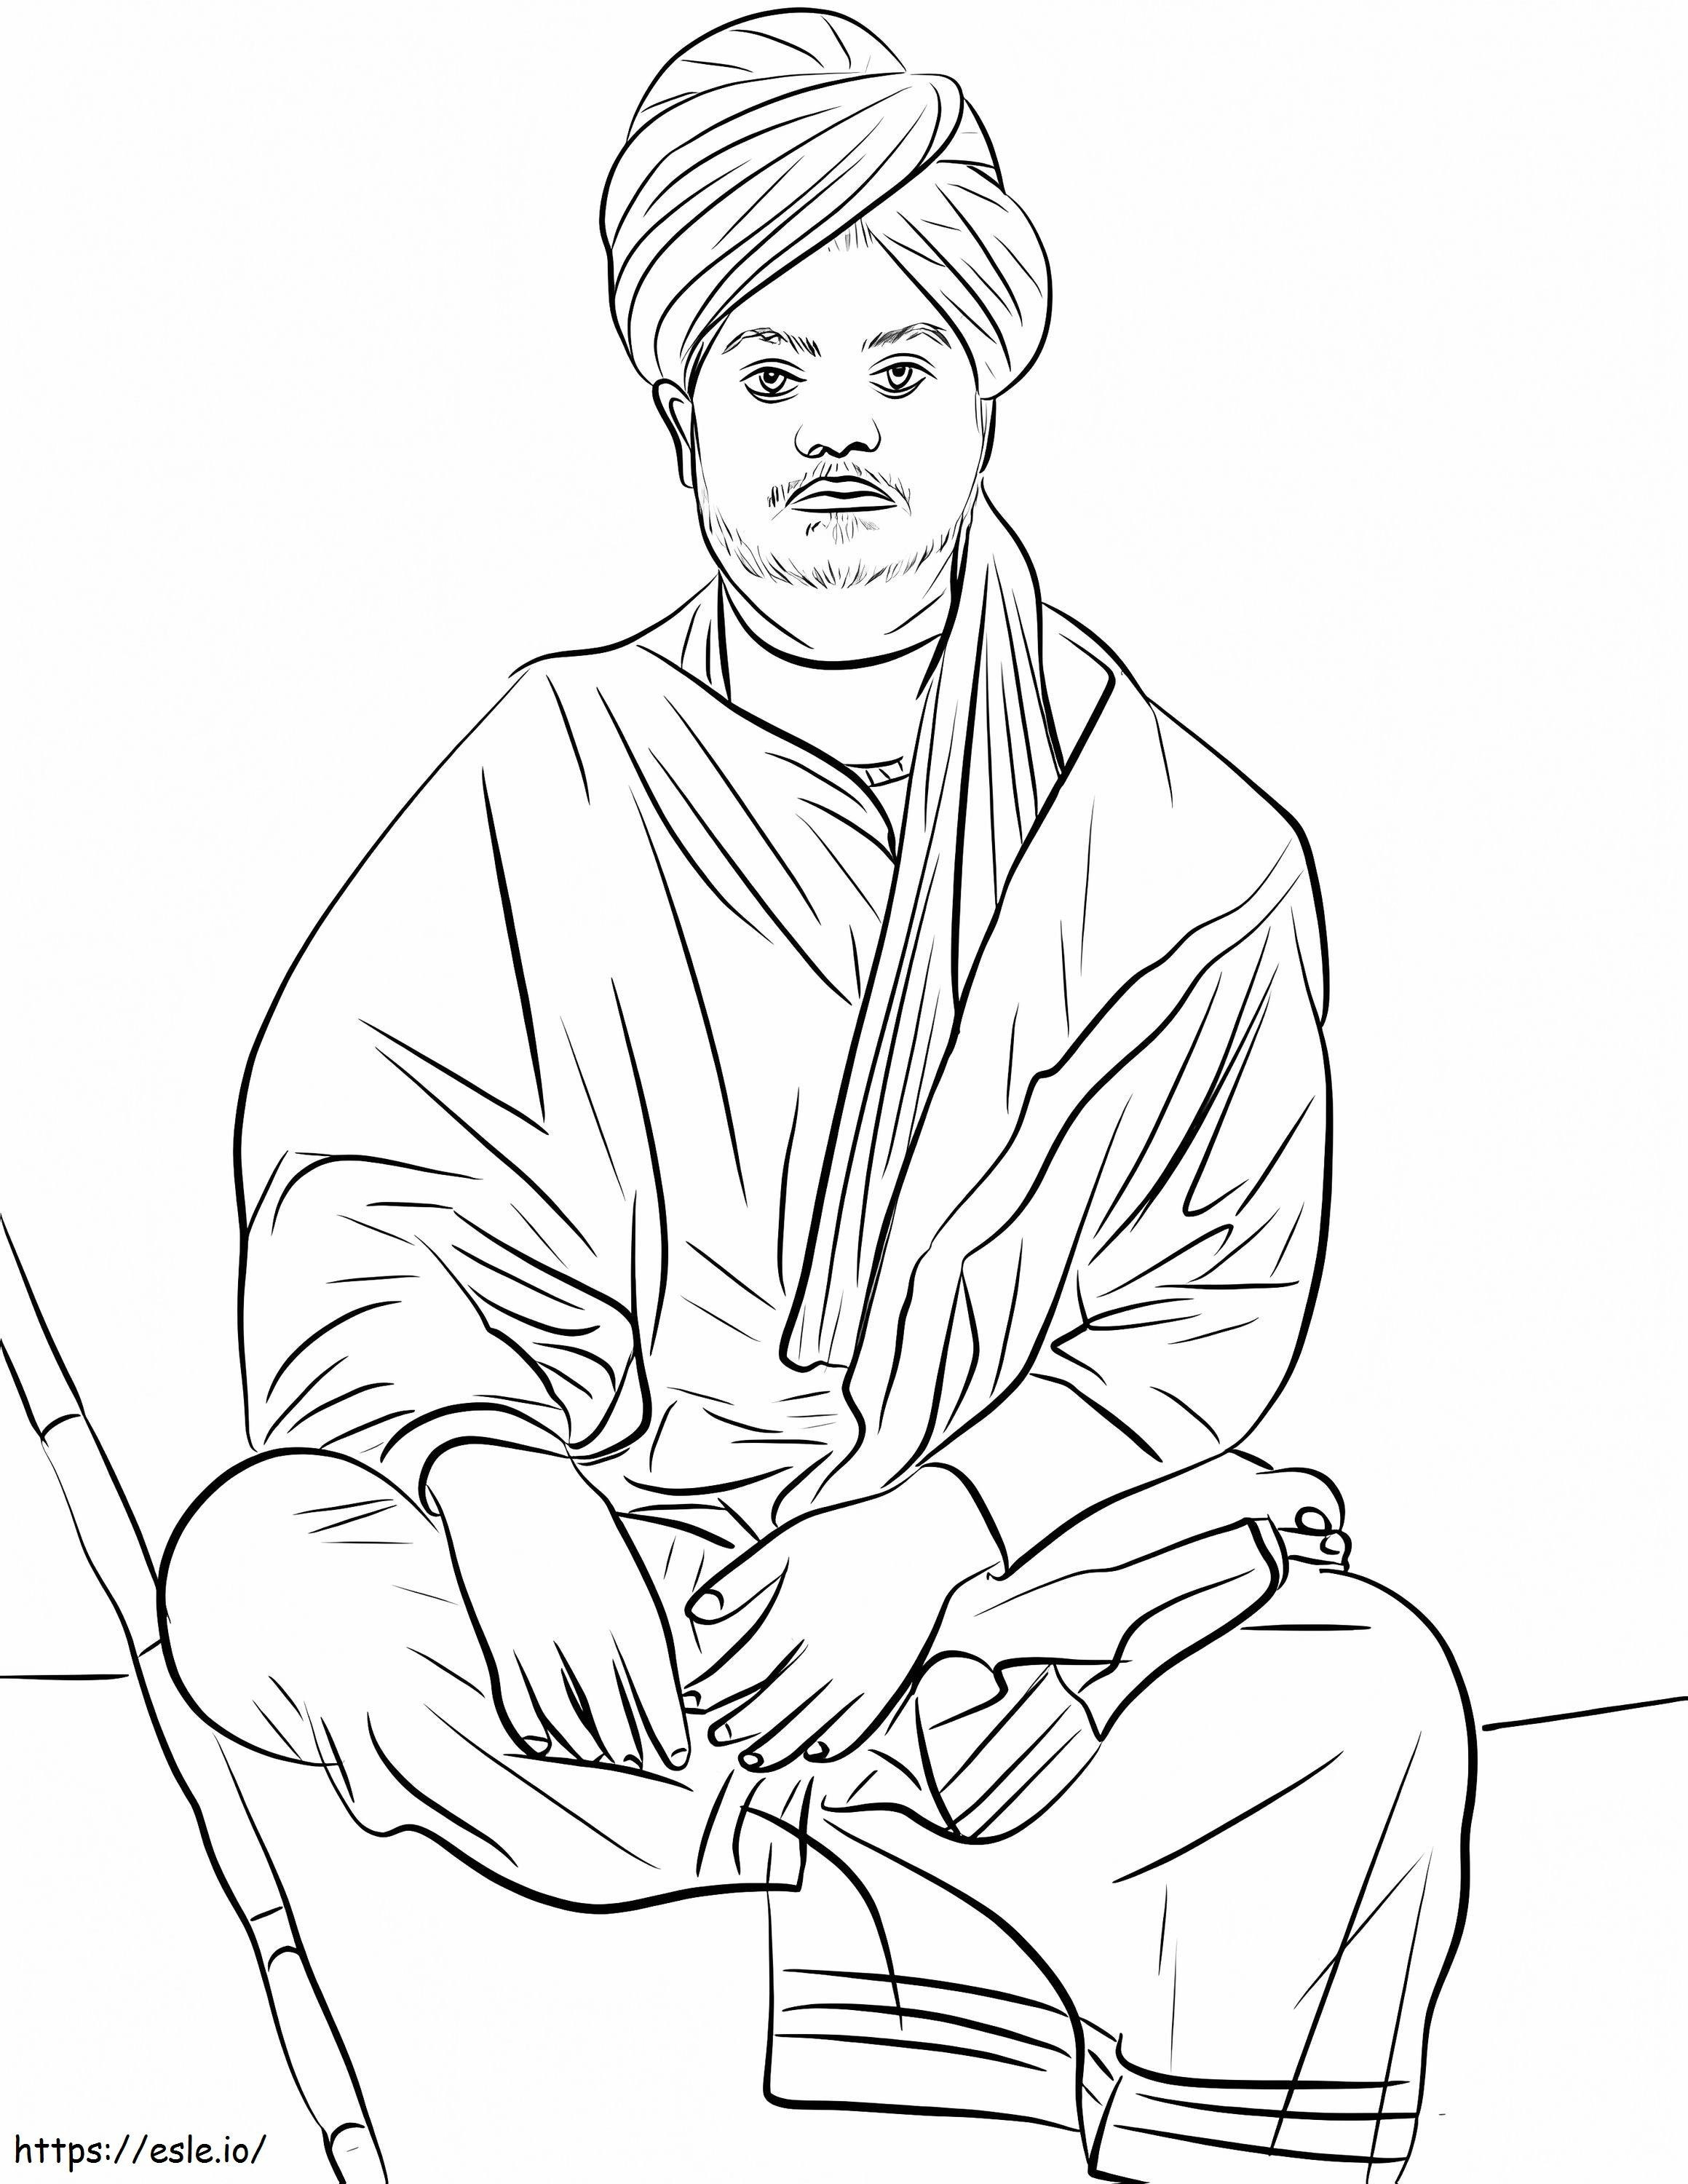 Swami Vivekananda coloring page